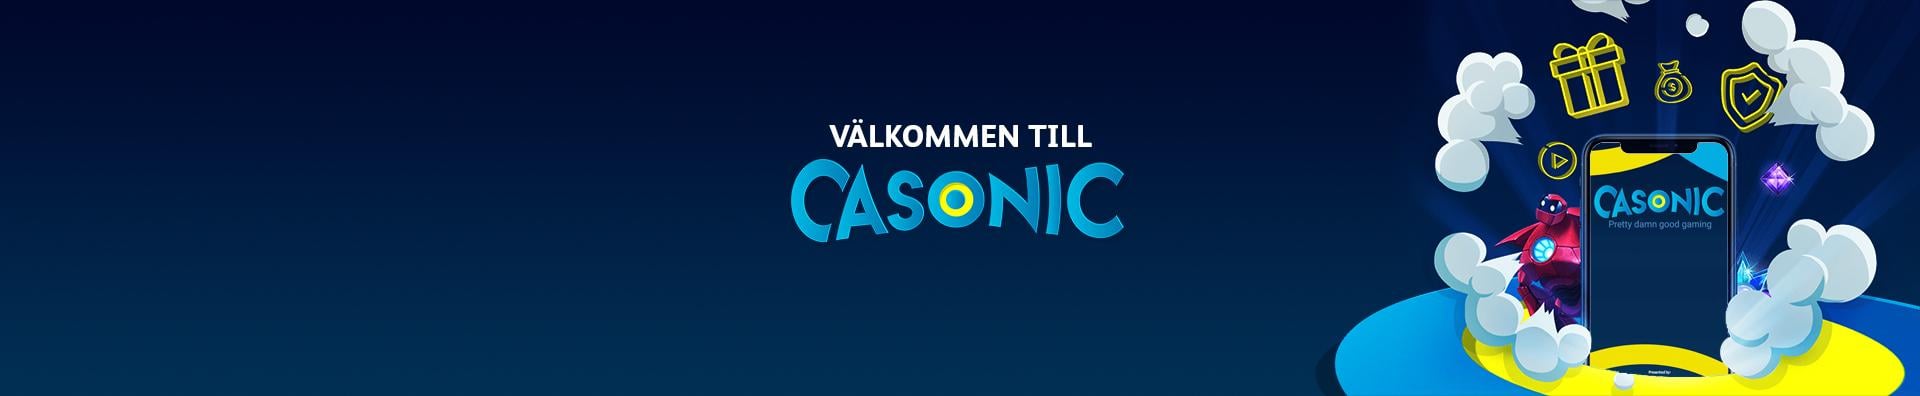 Casonic Casino recension banner casinoguide